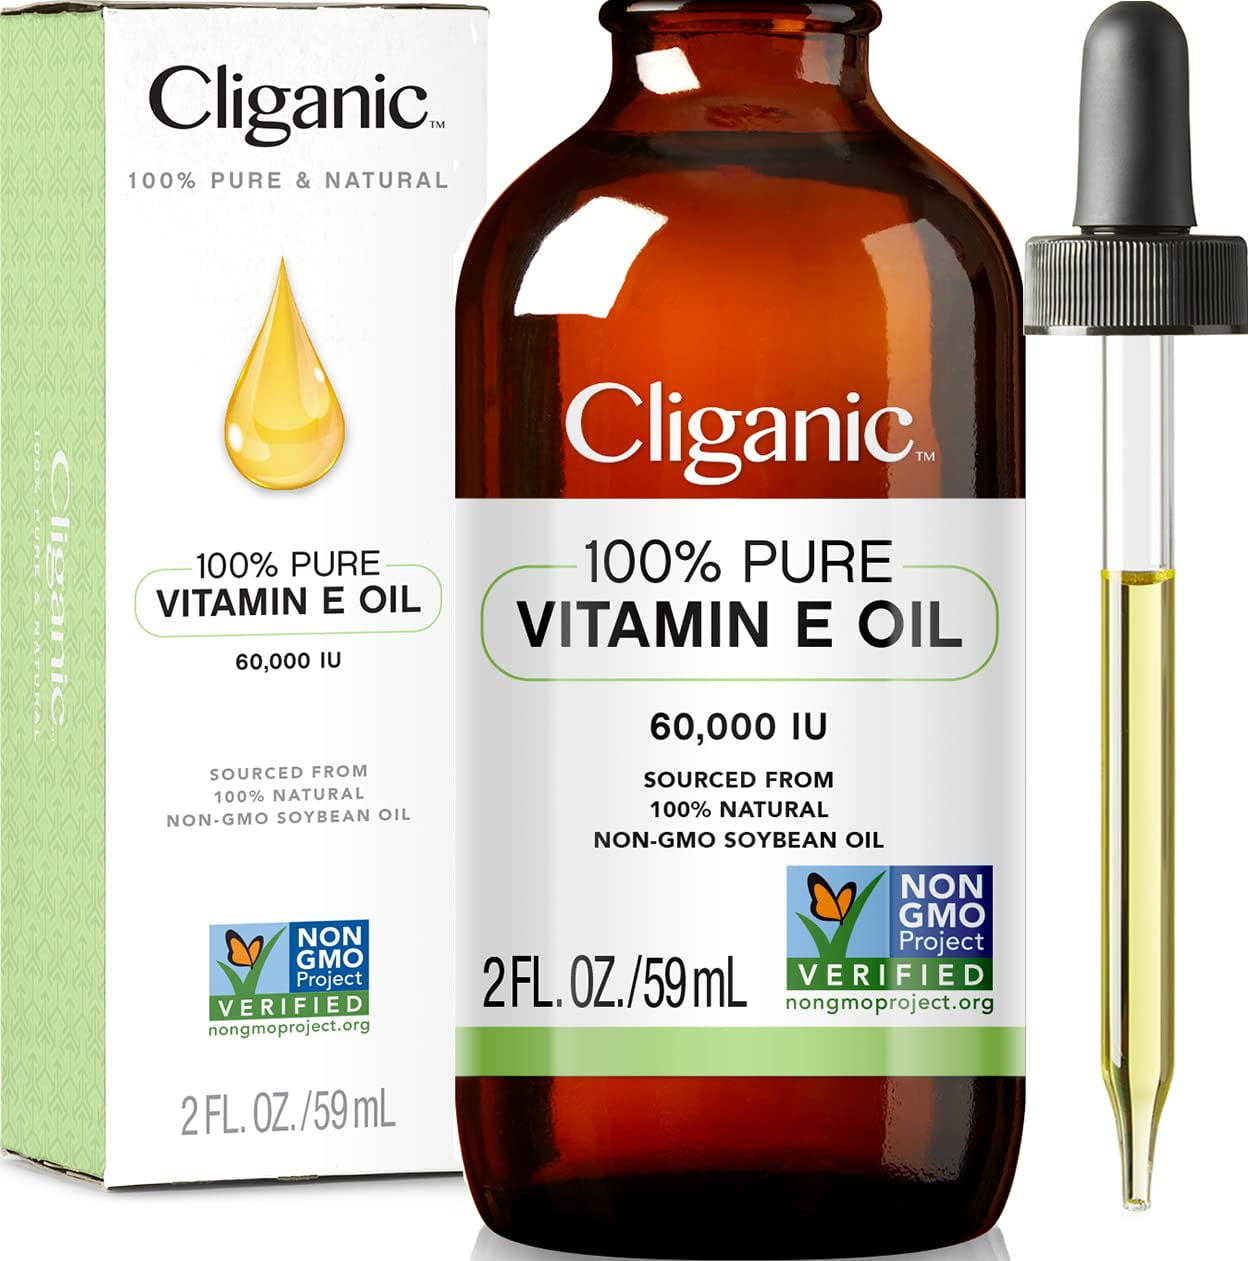 Cliganic Organic Hair Serum 2 oz